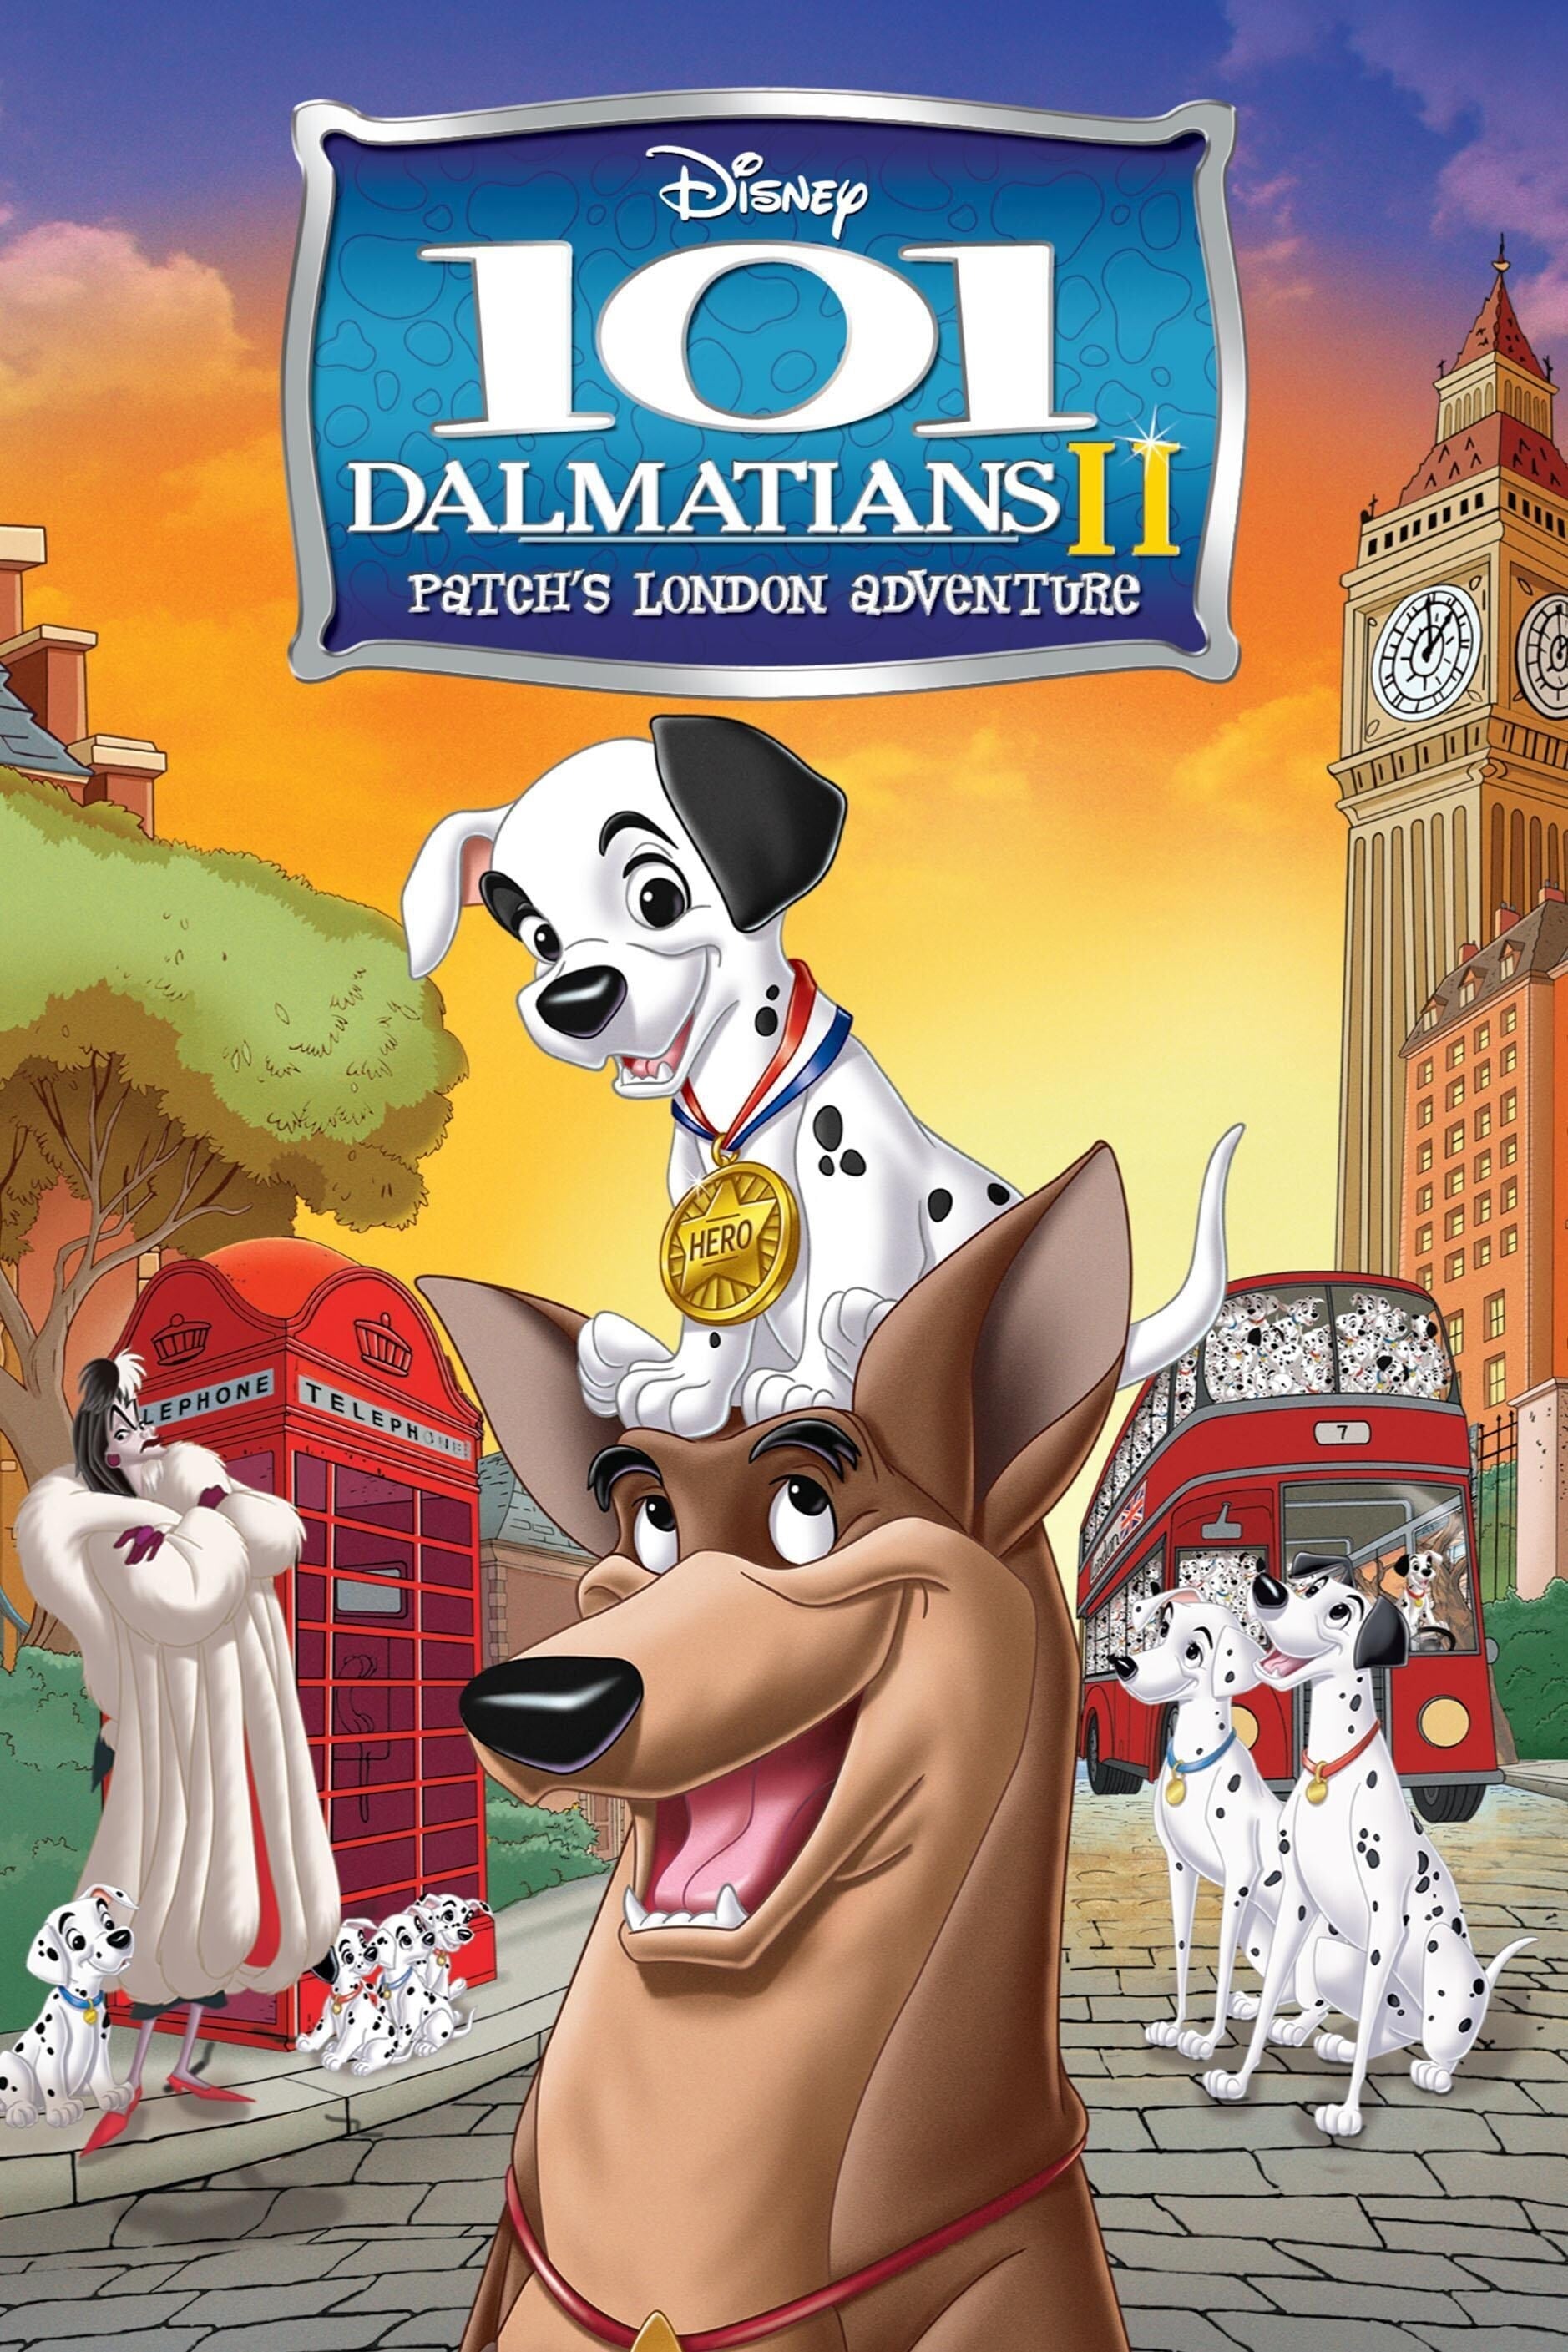 101 Dalmatians II: Patch's London Adventure (2002)